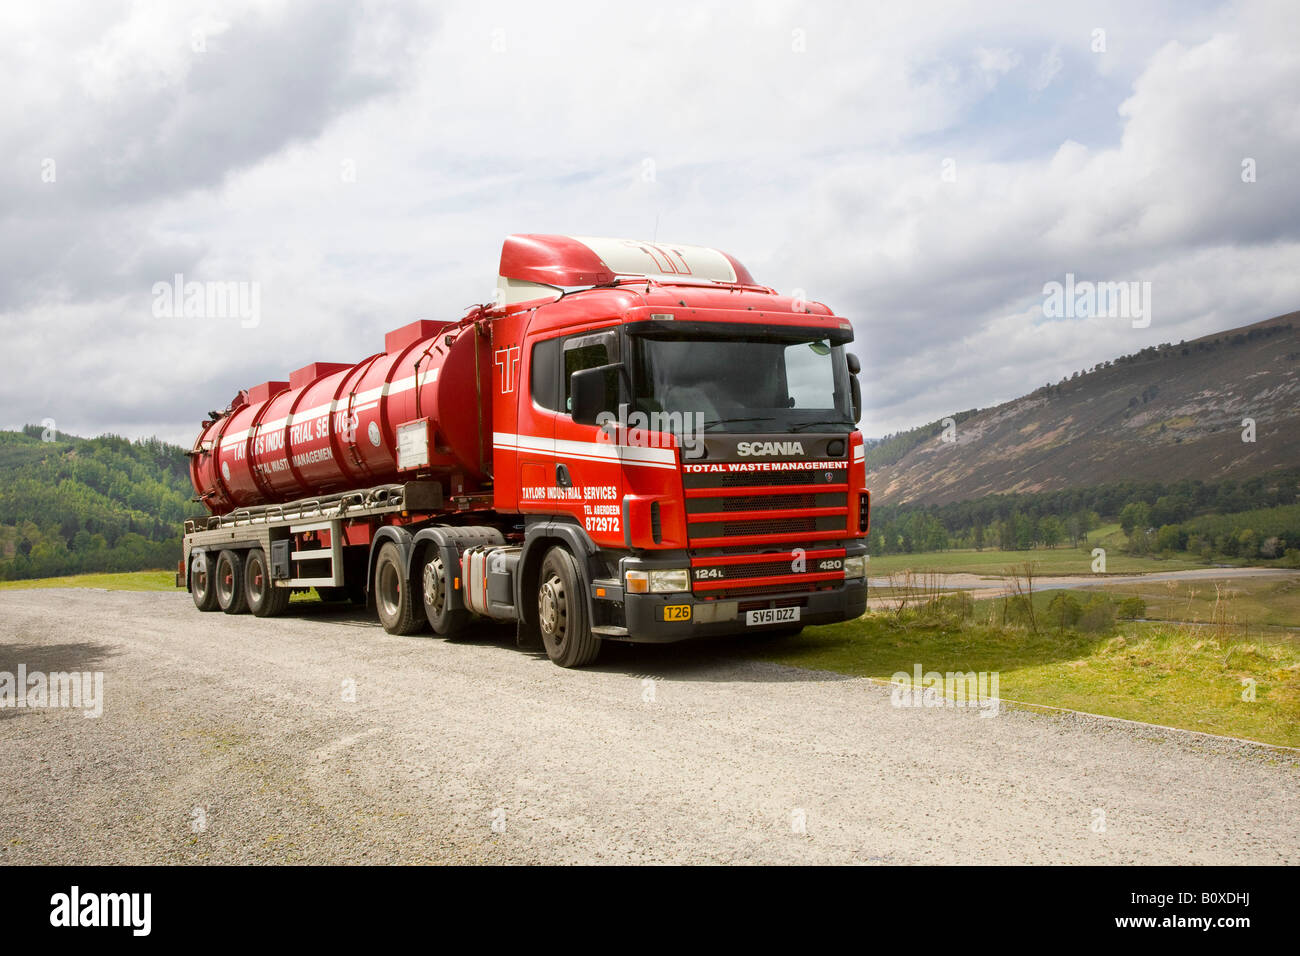 Roter geparkter Tankwagen, Abpumpwagen _ Total Waste Management_Scania 124L 420 Stockfoto